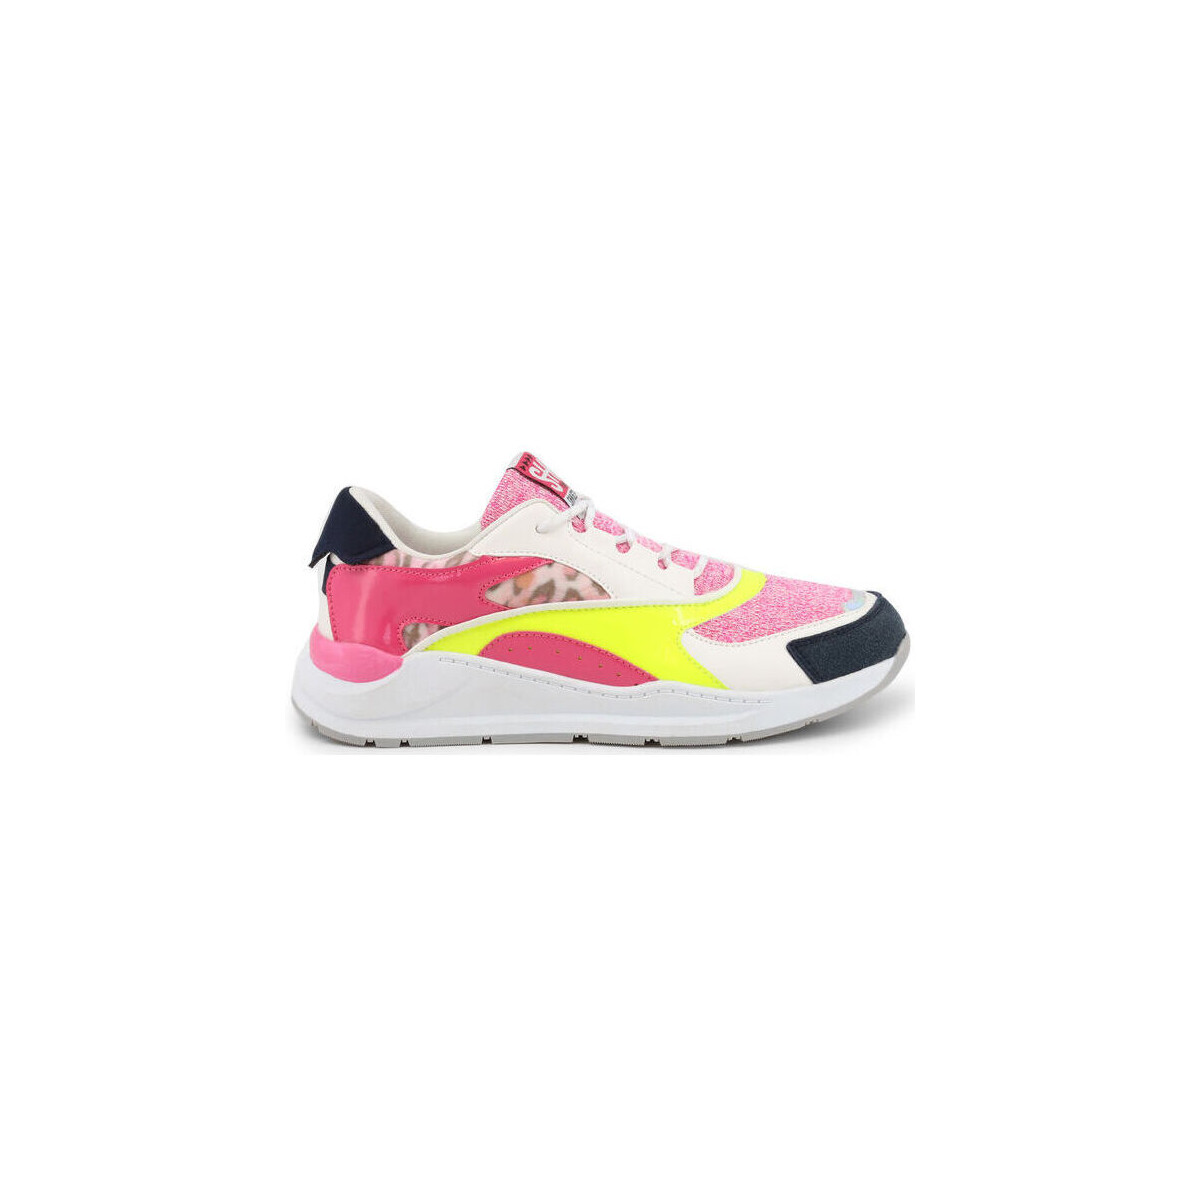 Sko Herre Sneakers Shone 3526-014 Fuxia Pink